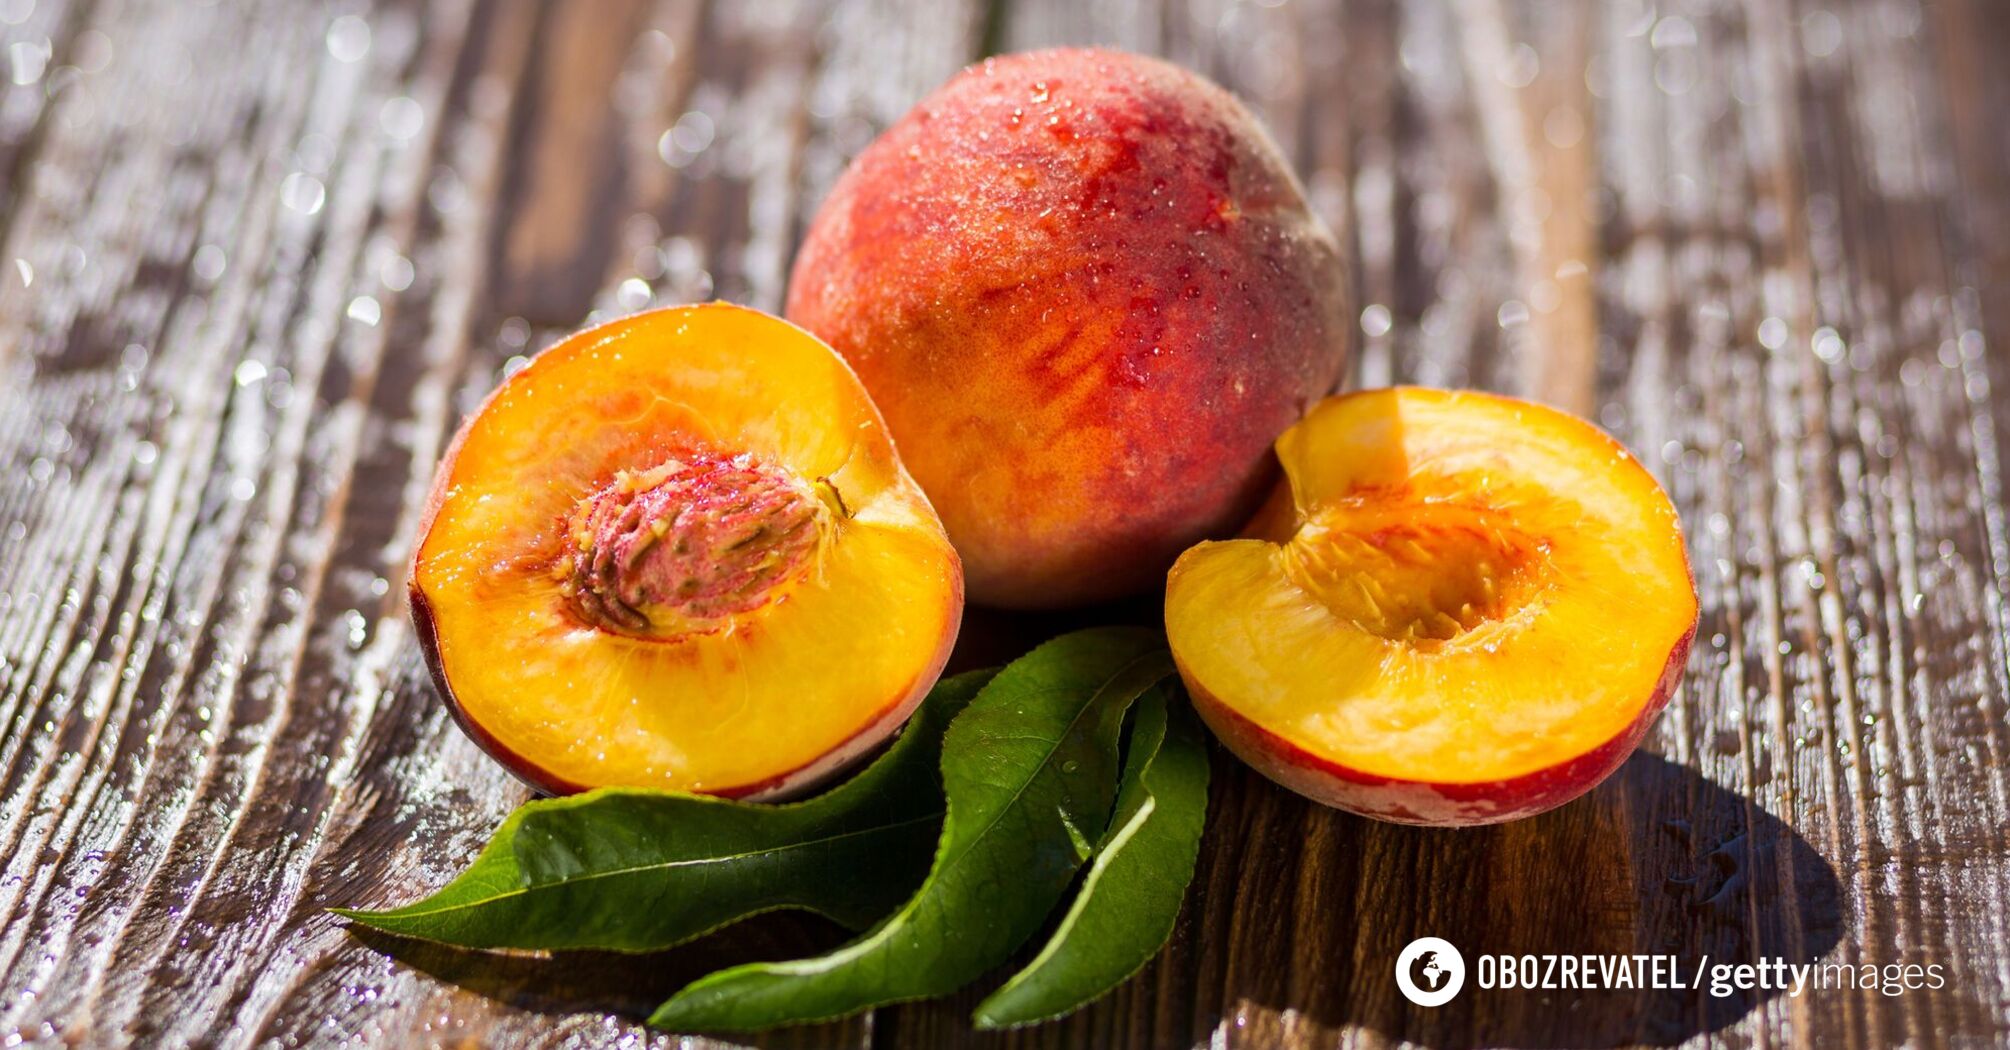 Peaches help improve skin condition